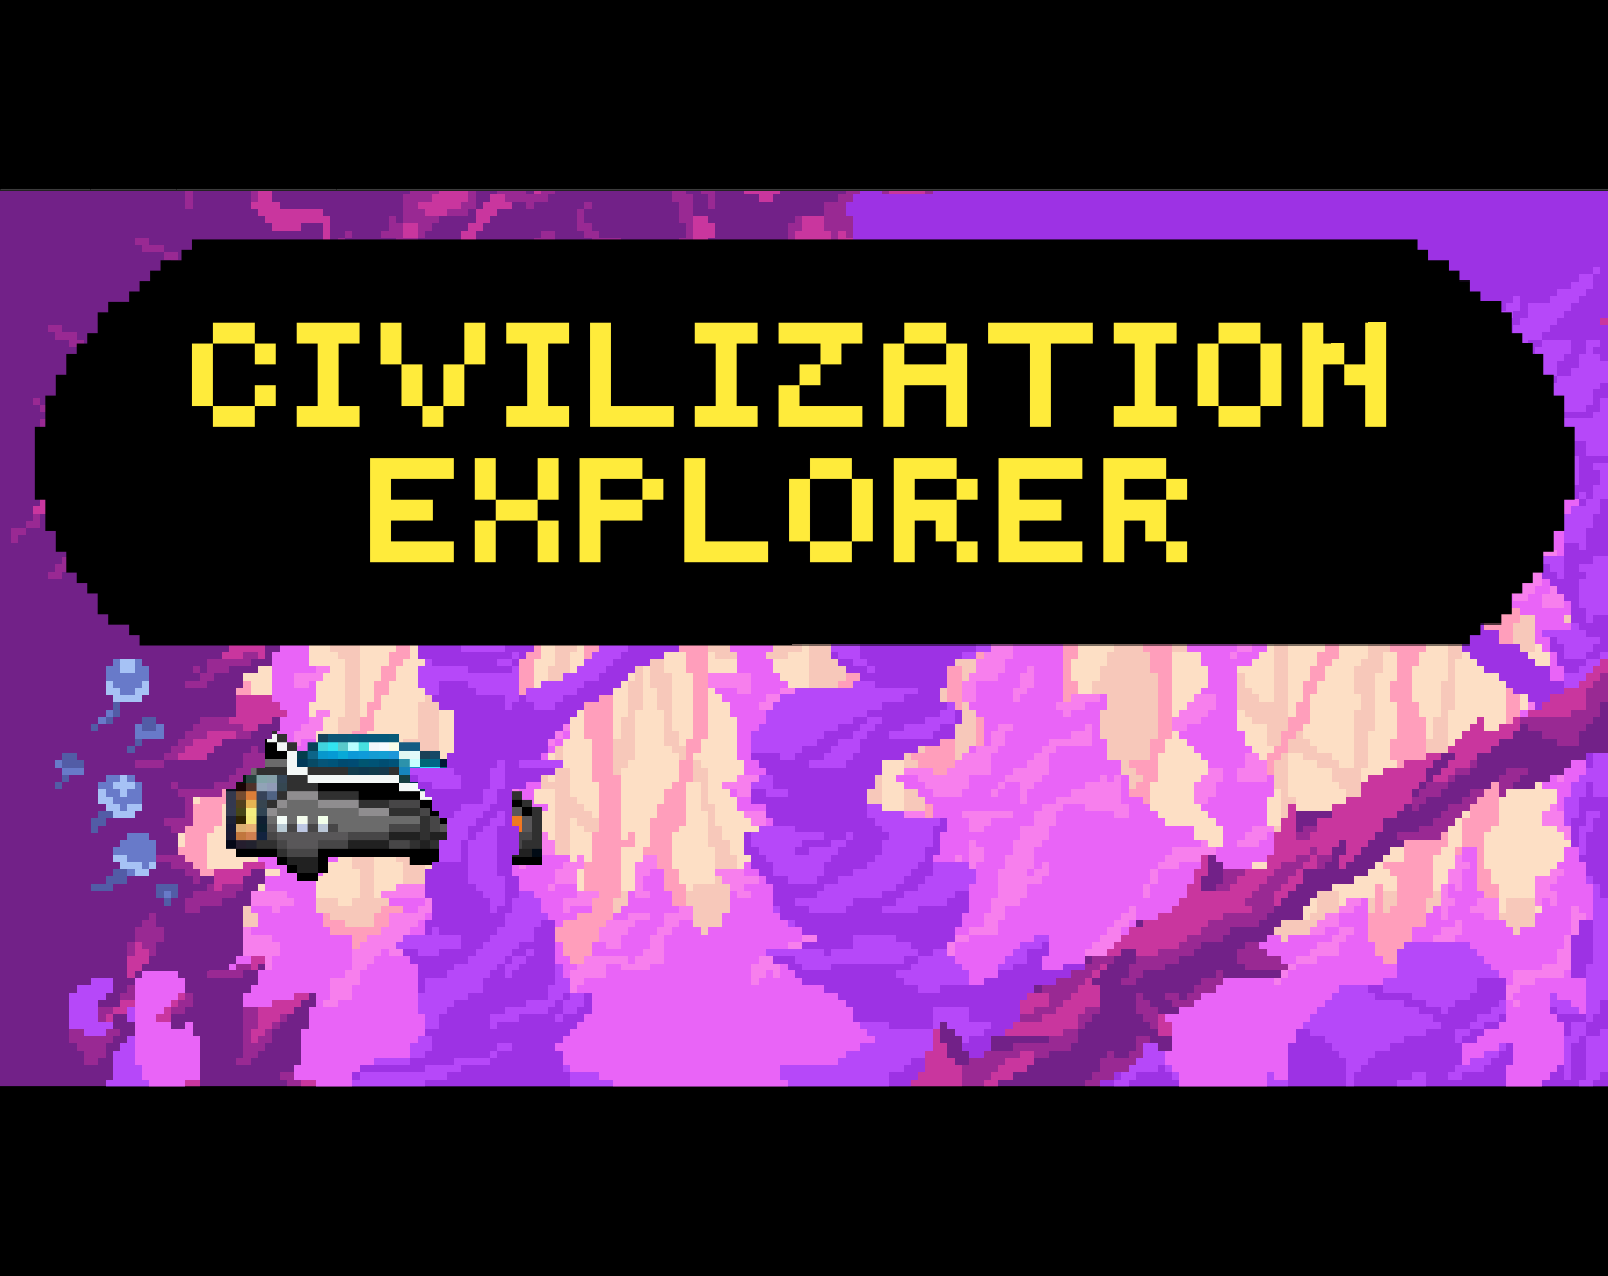 Civilization Explorer